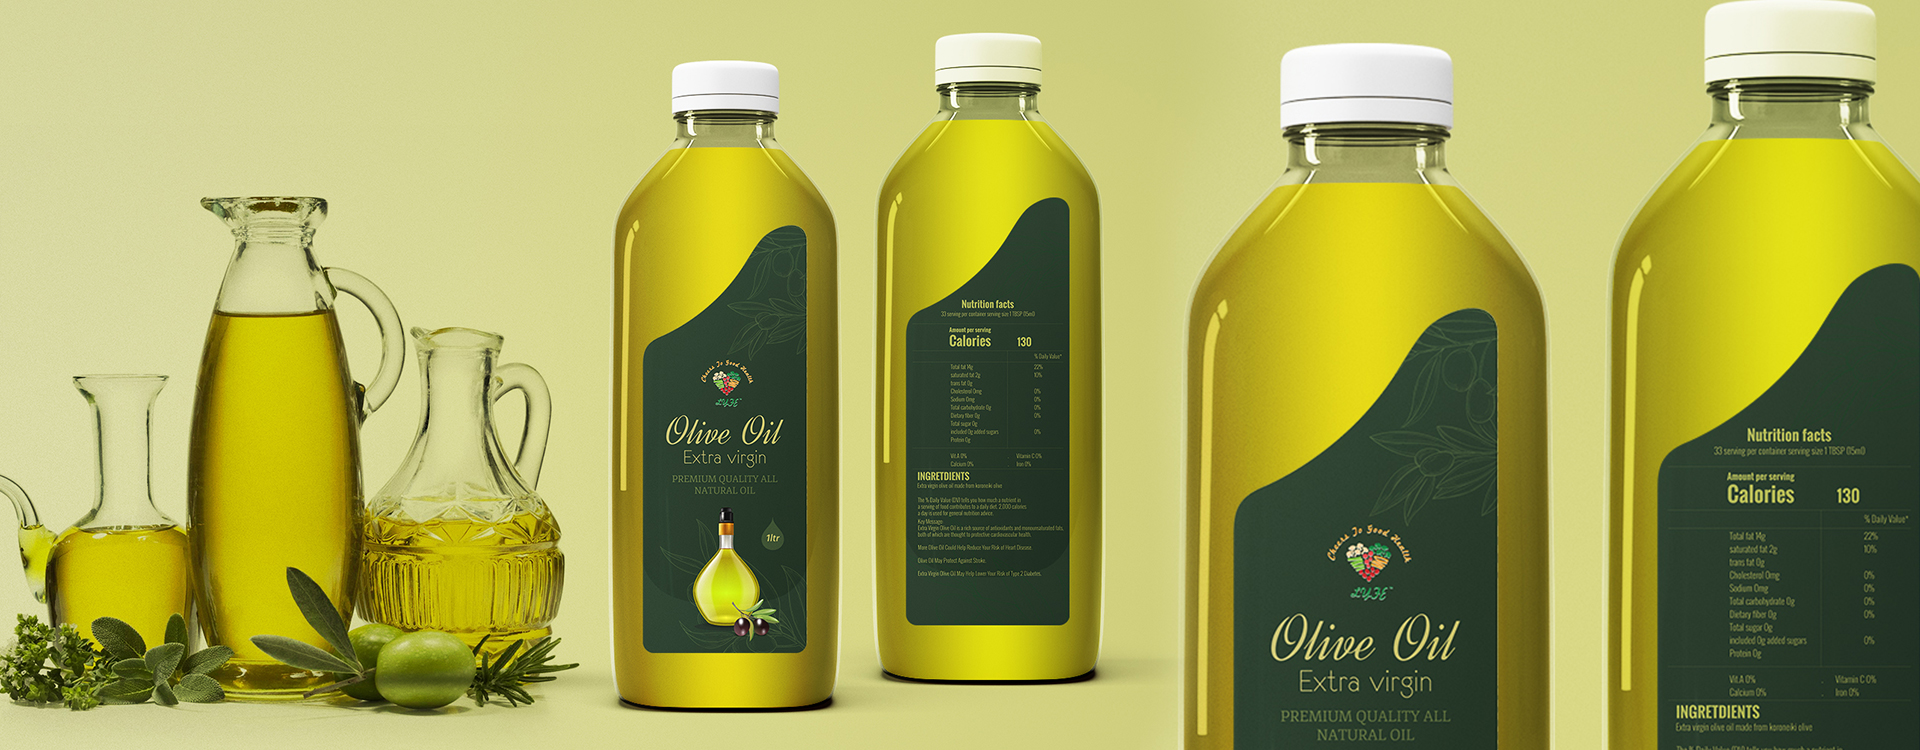 LYFE Pure olive oil